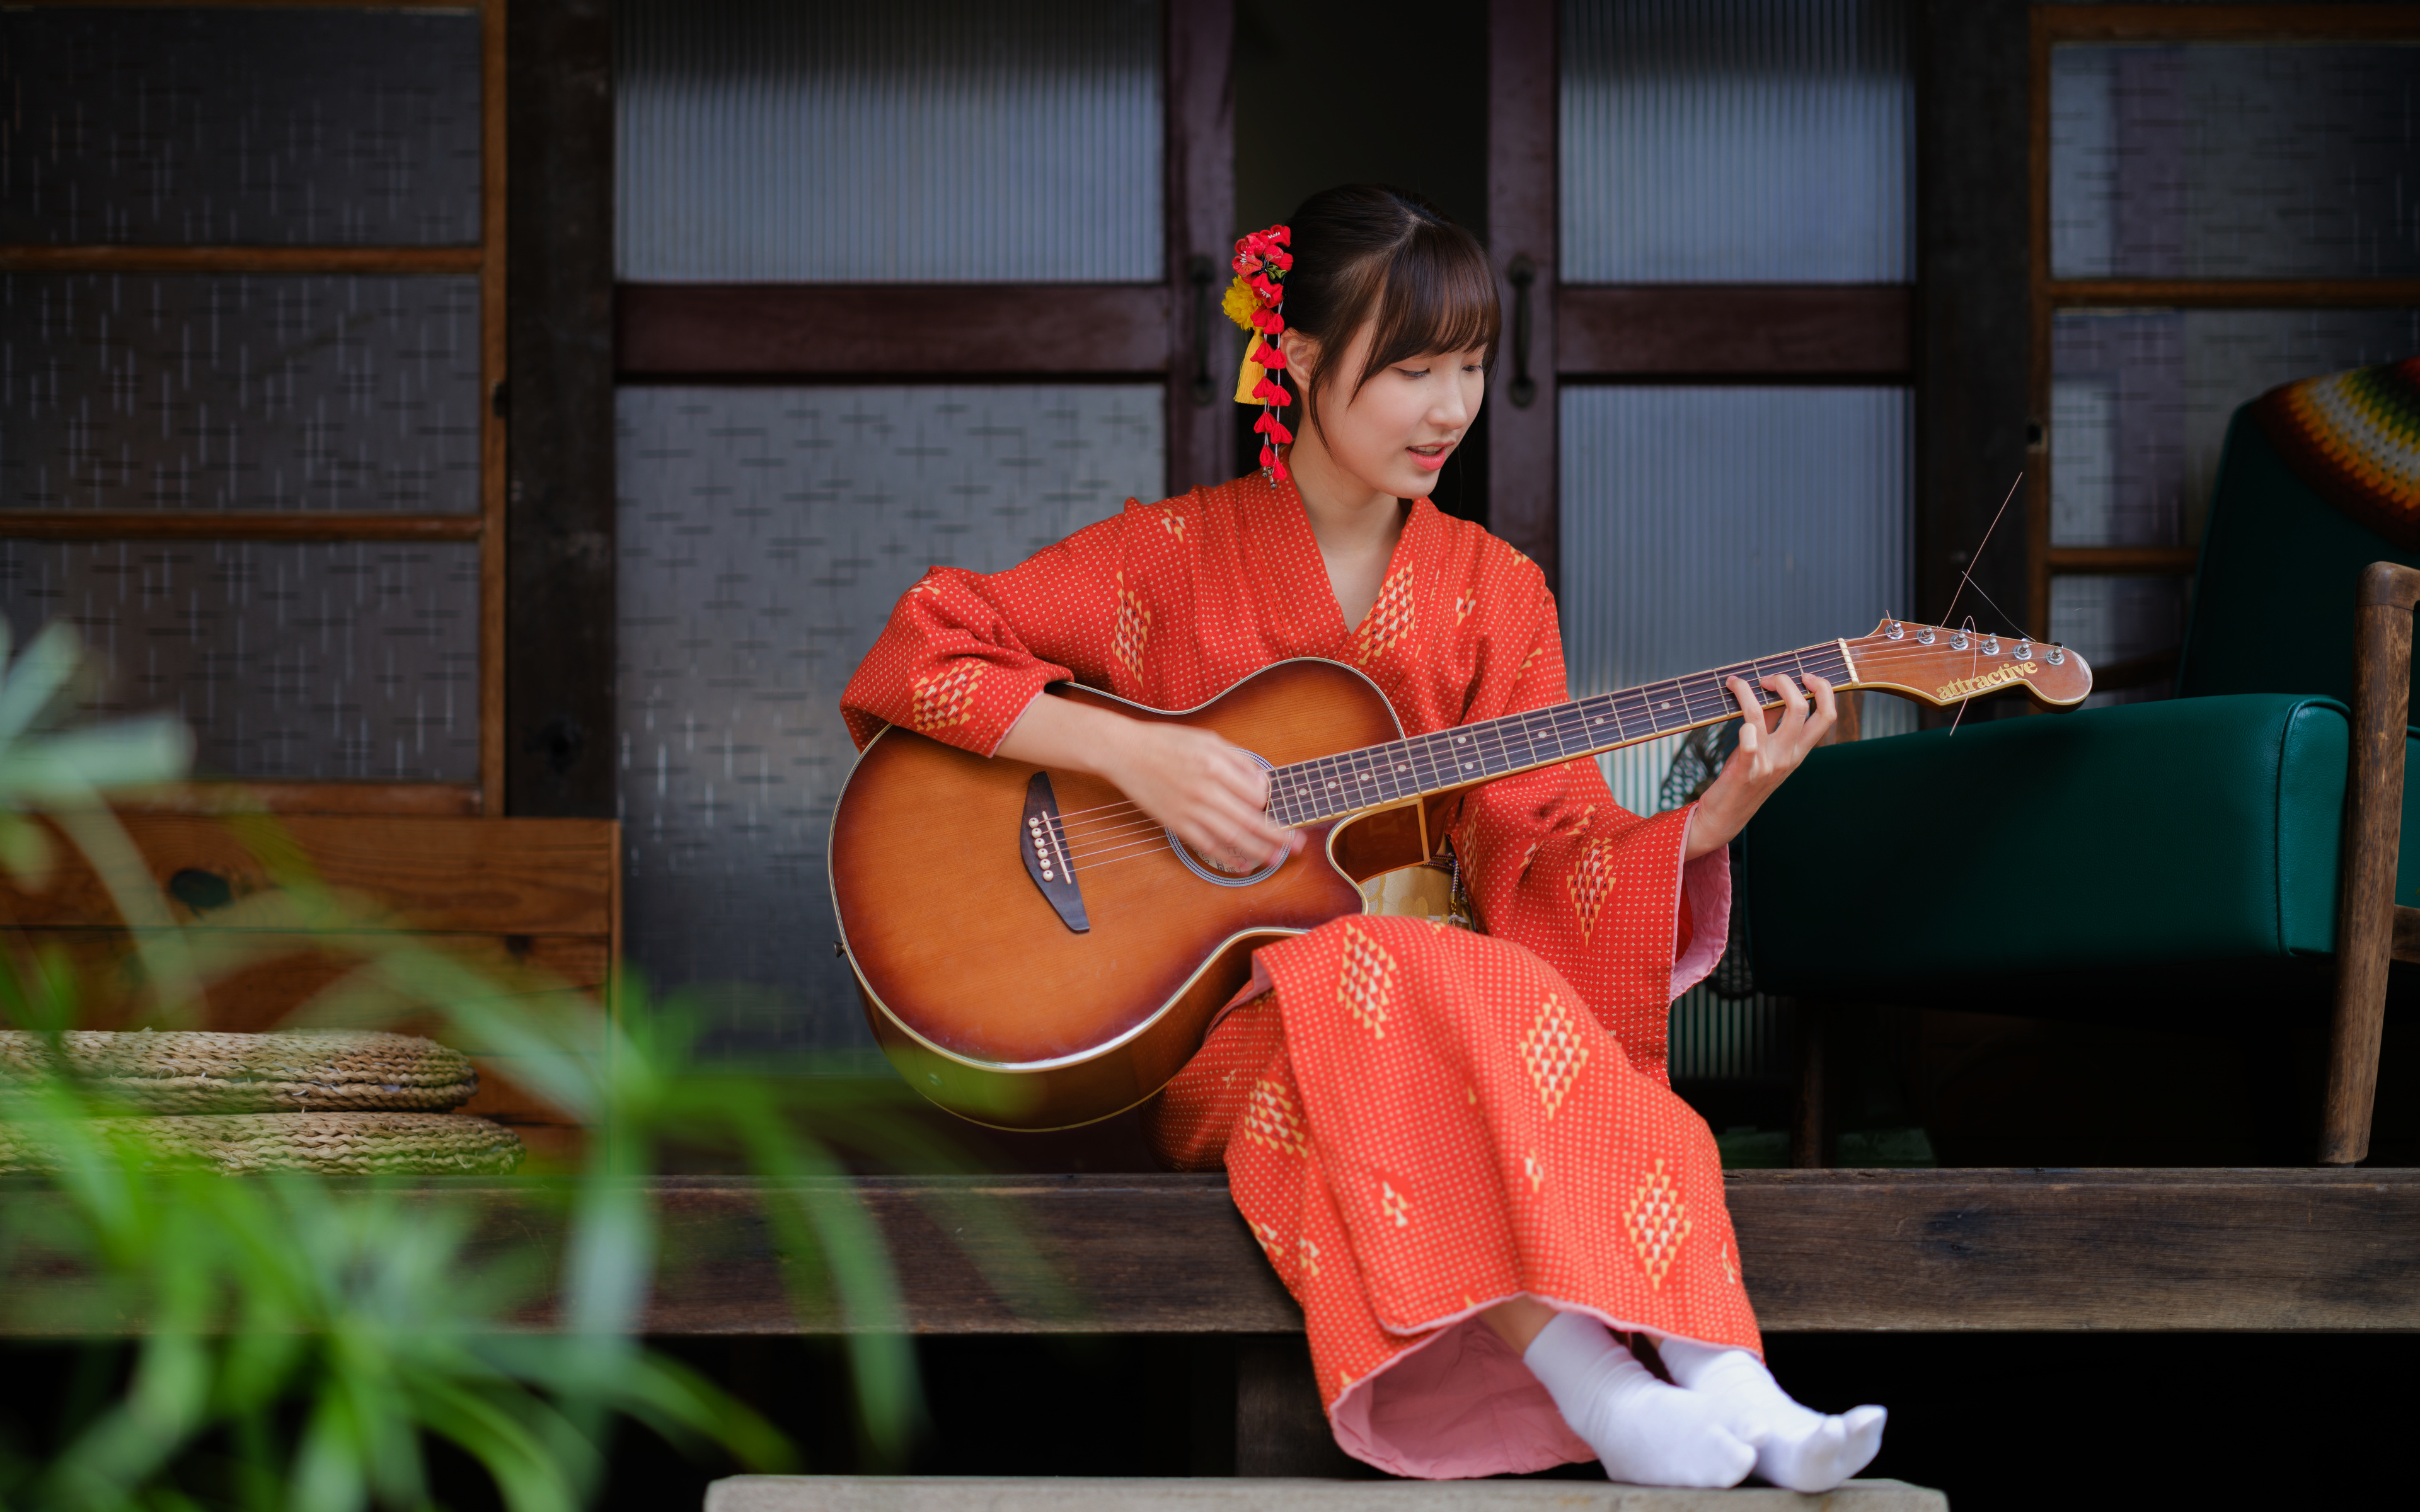 People 3840x2400 Asian model women long hair dark hair kimono traditional clothing hair ornament sitting guitar porch plants depth of field white socks